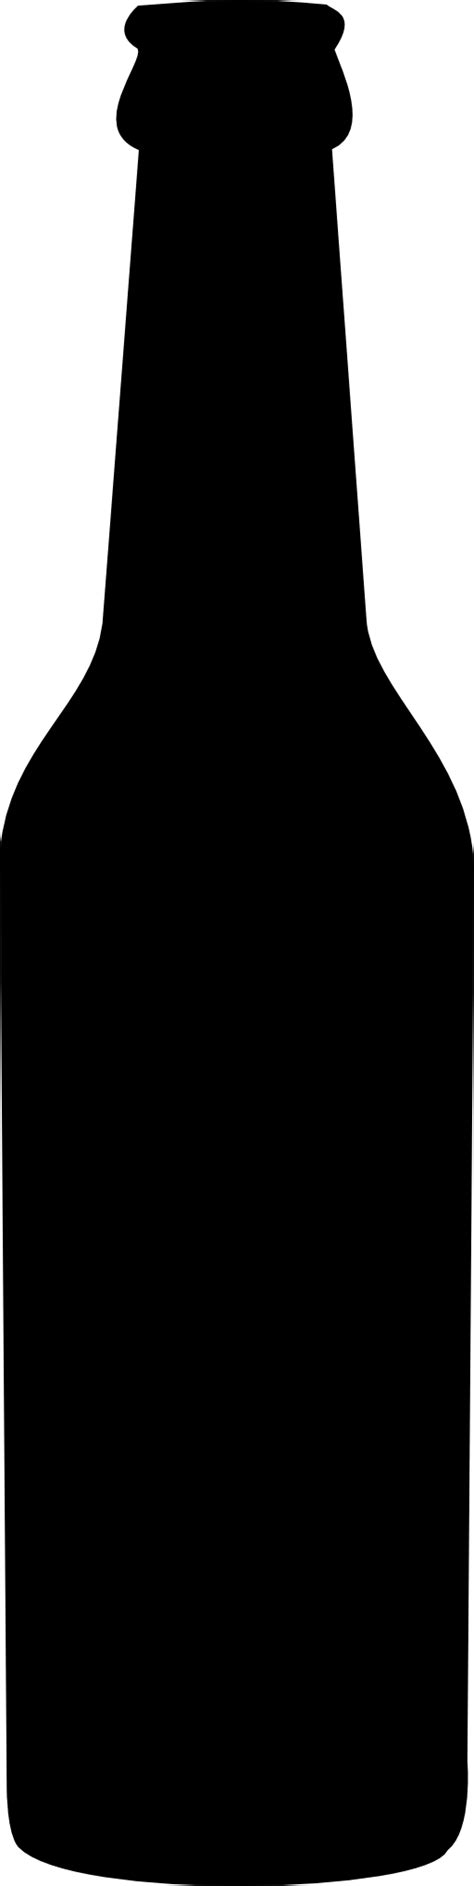 Long Neck Bottle Silhouette Clipart | i2Clipart - Royalty Free Public Domain Clipart